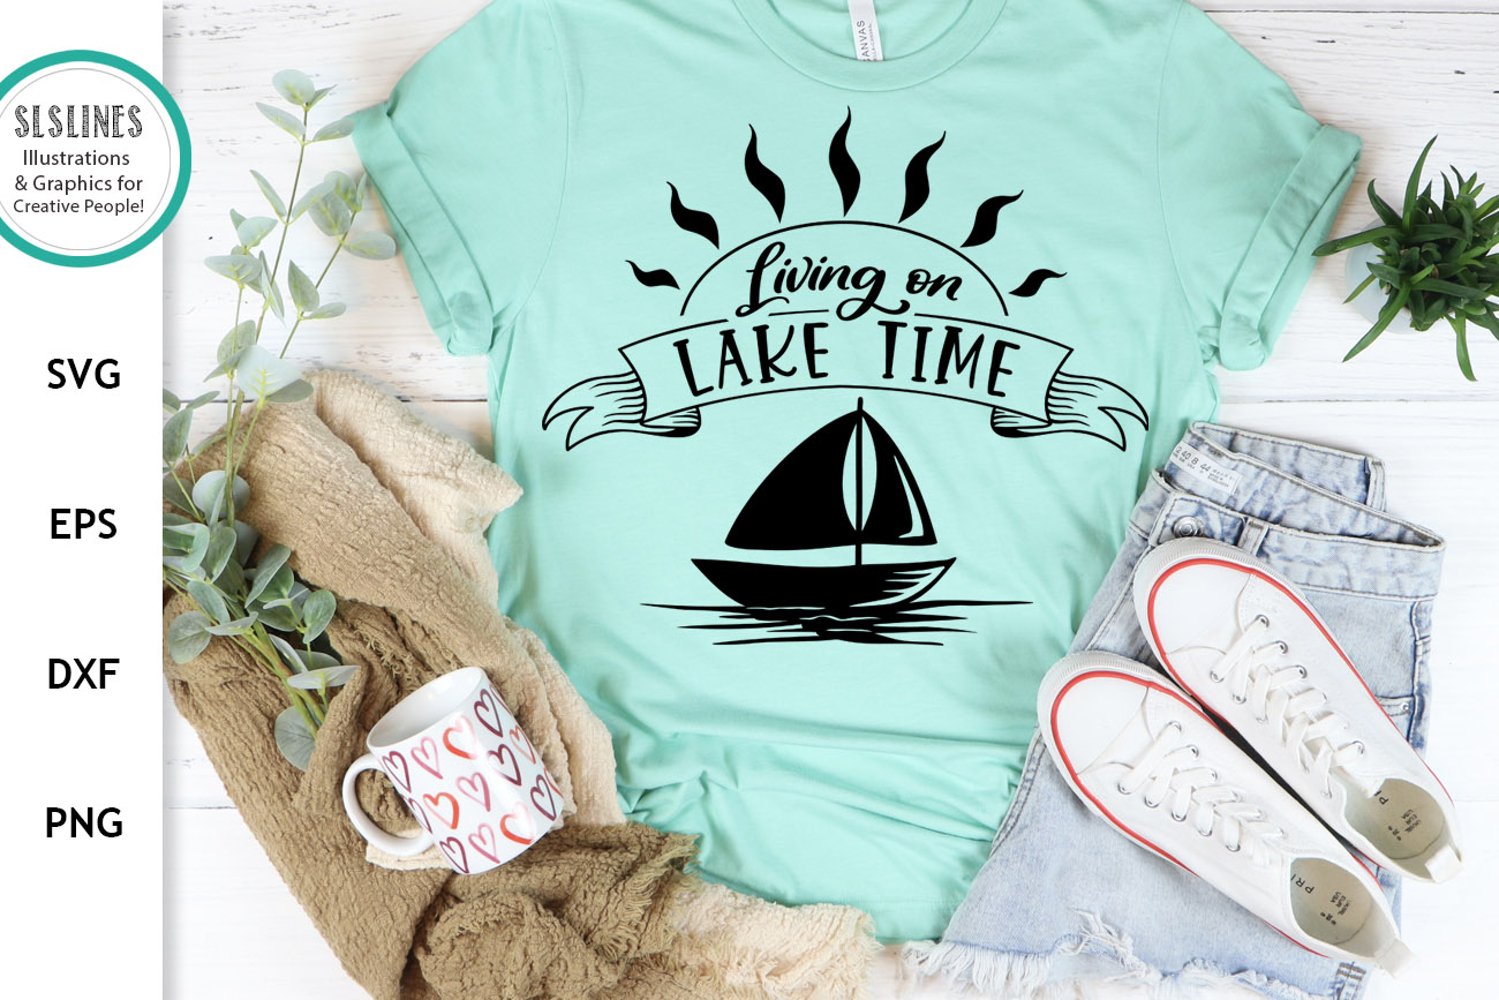 Enjoy your living on lake time.